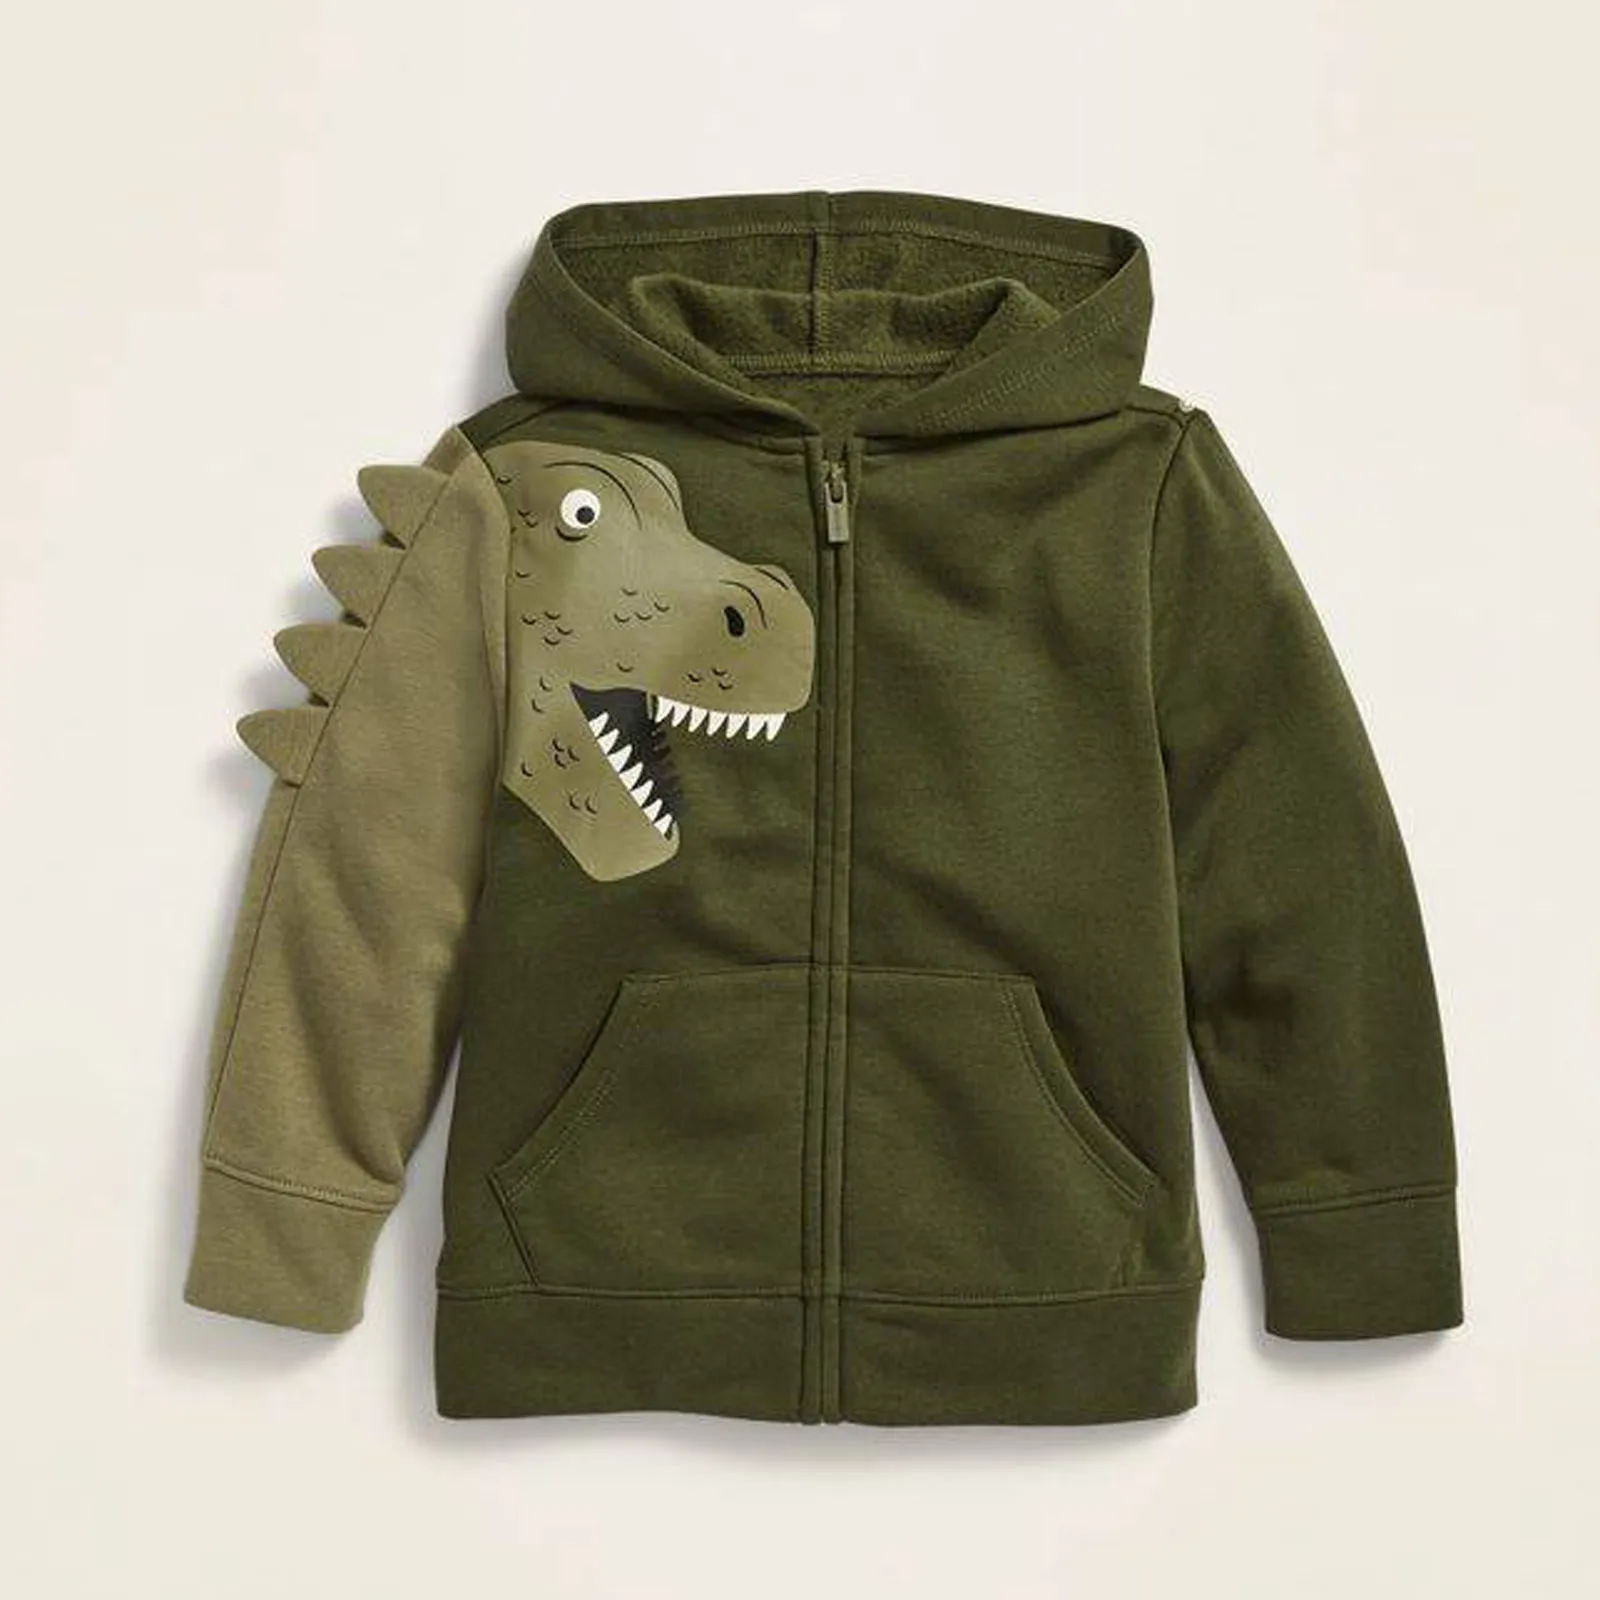 Kids Toddler Boys Dinosaur Hoodie Coat Jacket Autumn Winter Hooded Outerwear Top 